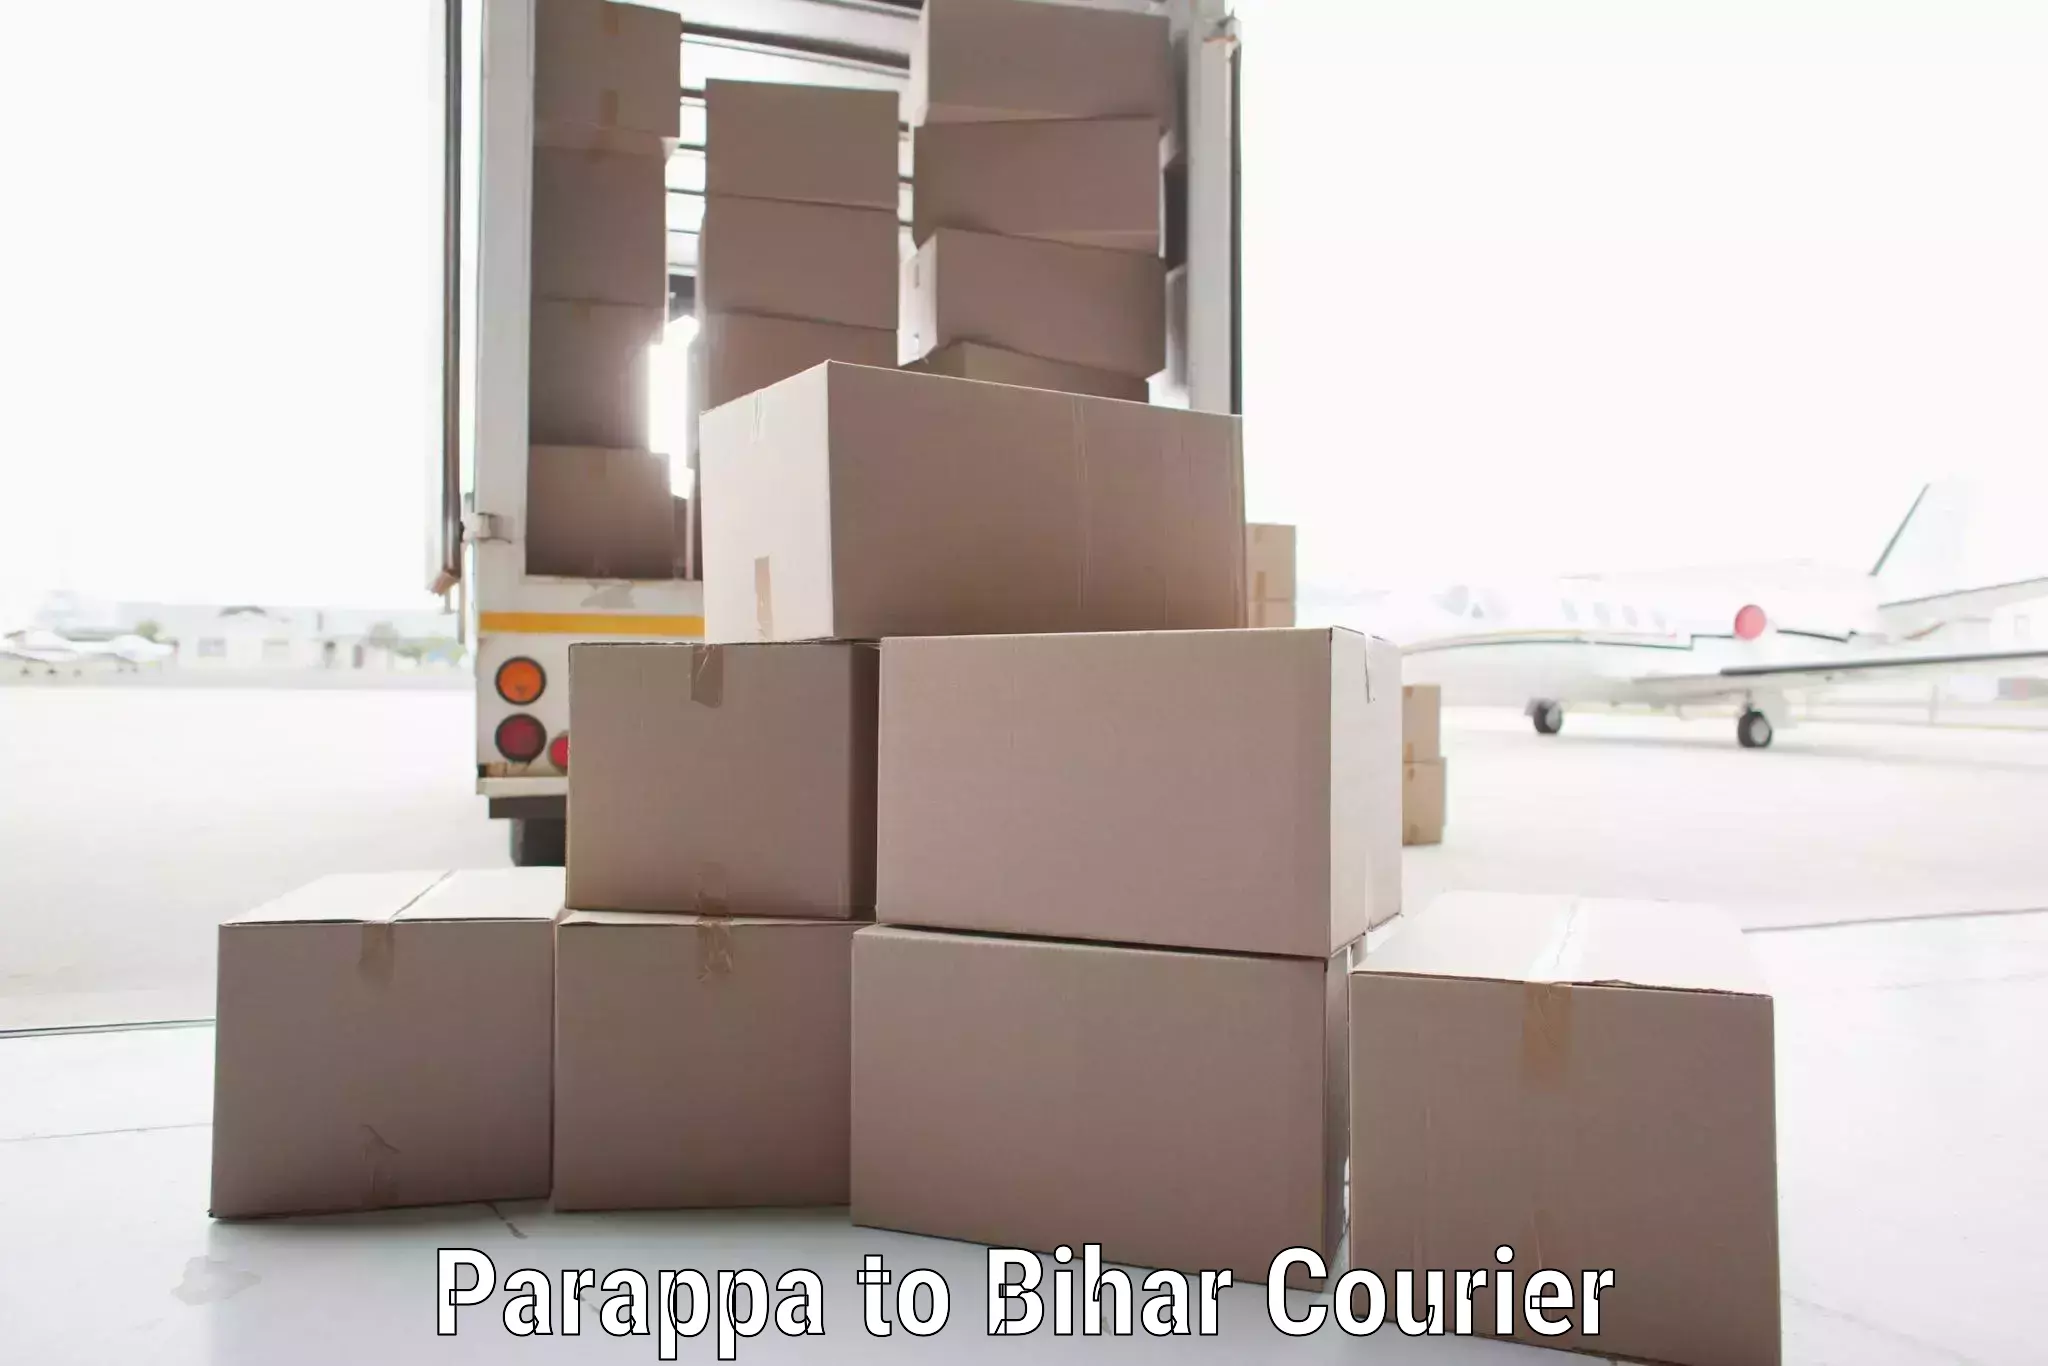 Digital courier platforms Parappa to Bihar